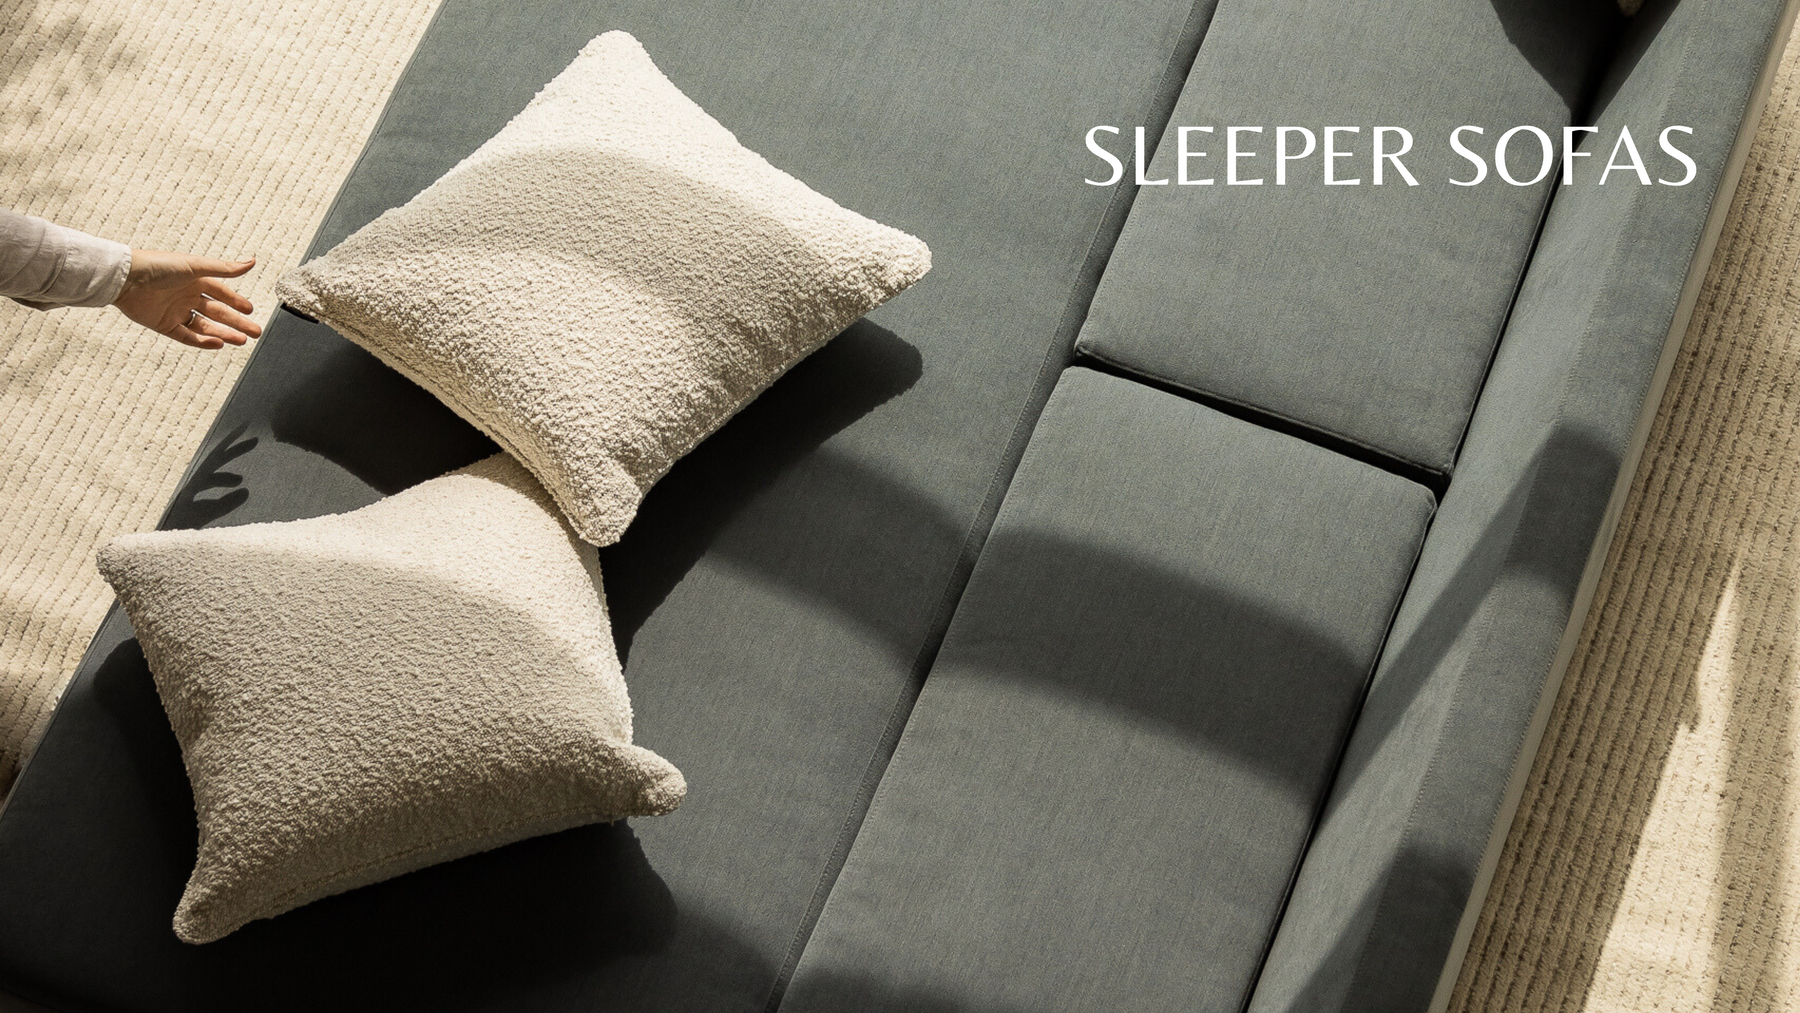 Sleeper Sofas - Stylish Comfort for Smart Spaces